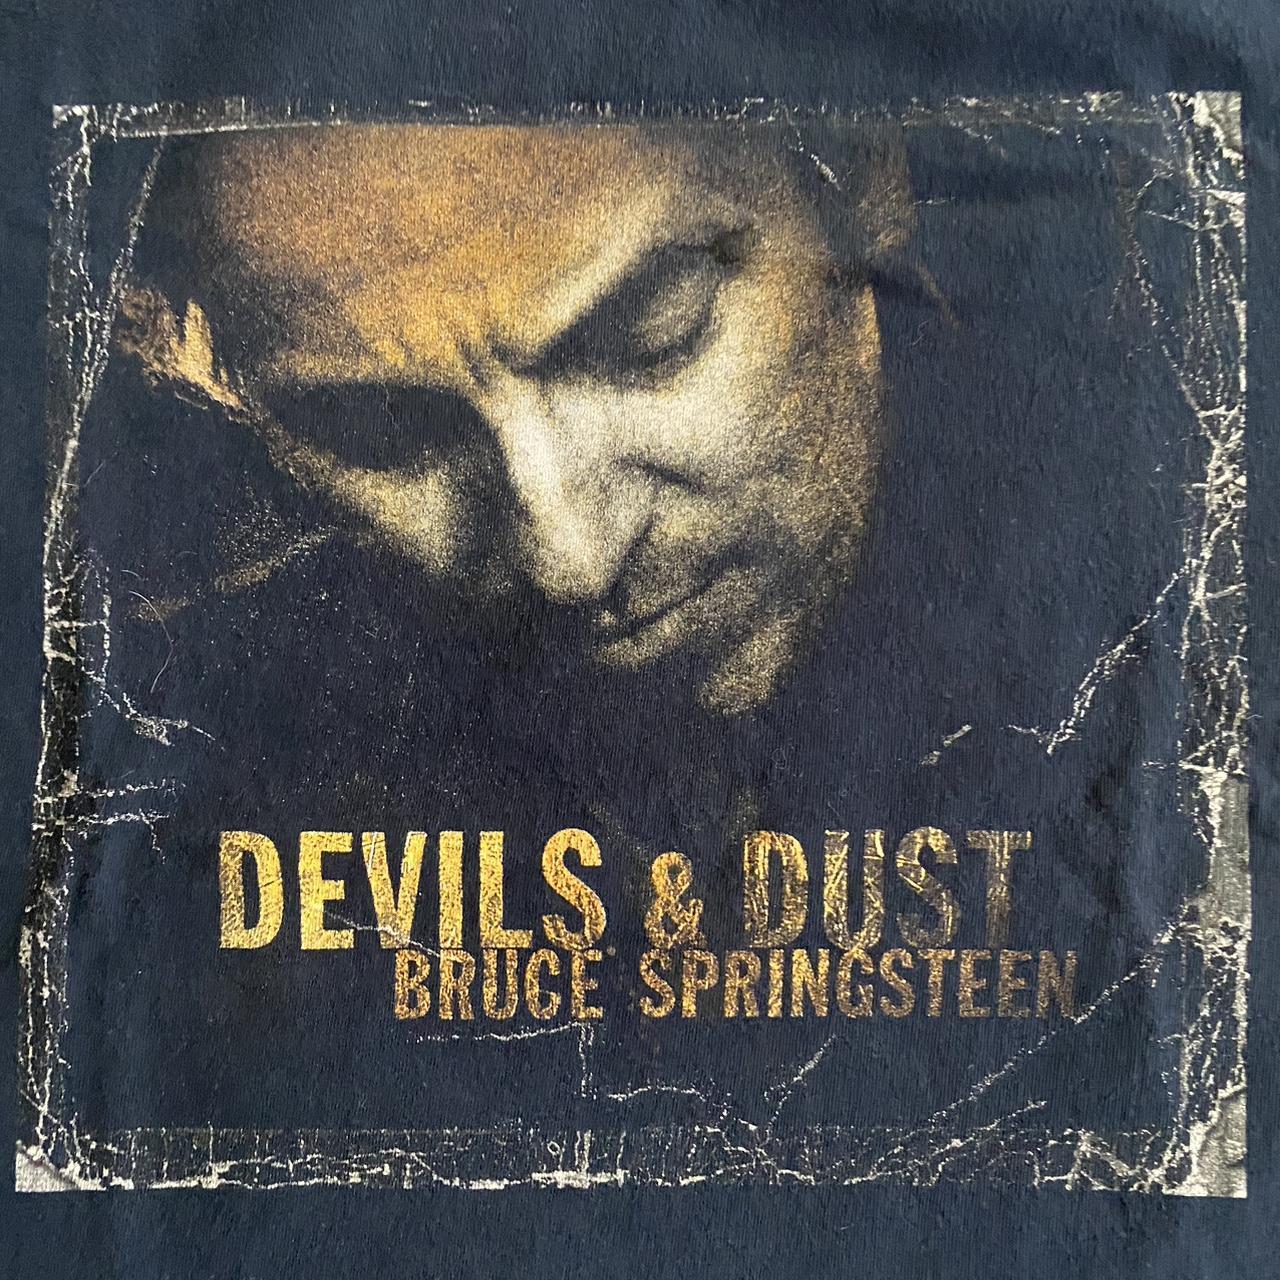 Bruce Springsteen New Jersey Devils T-shirt unworn - Depop